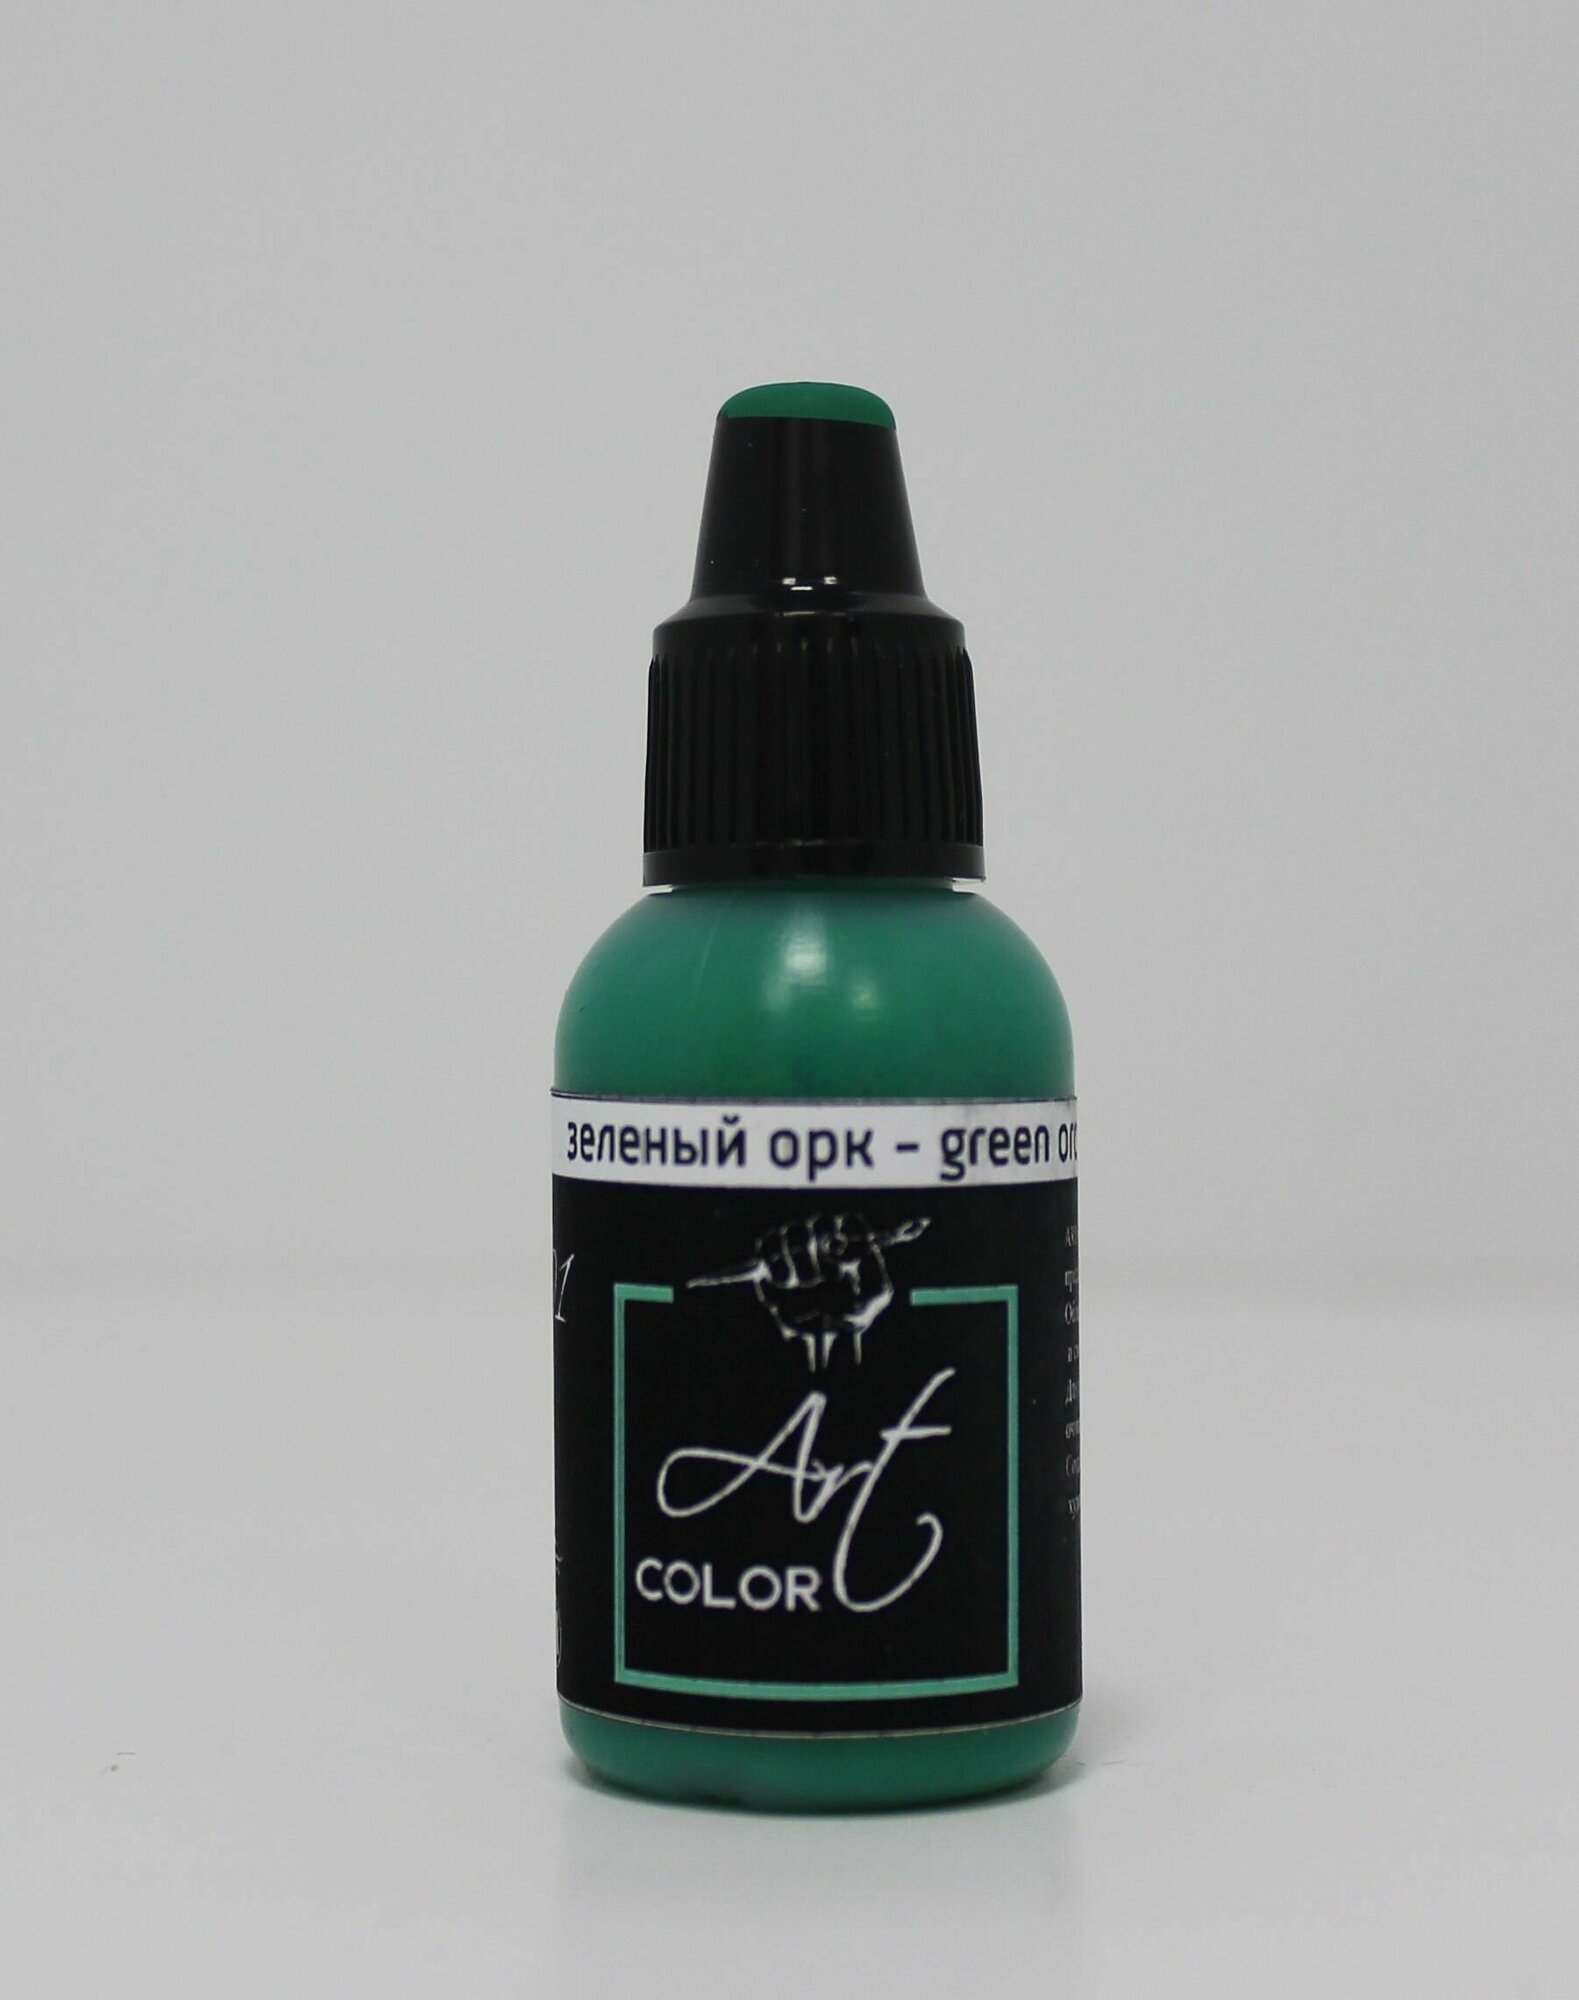 Pacific88 Art Color Краска для кисти Зеленый орк (green orc), 18 ml